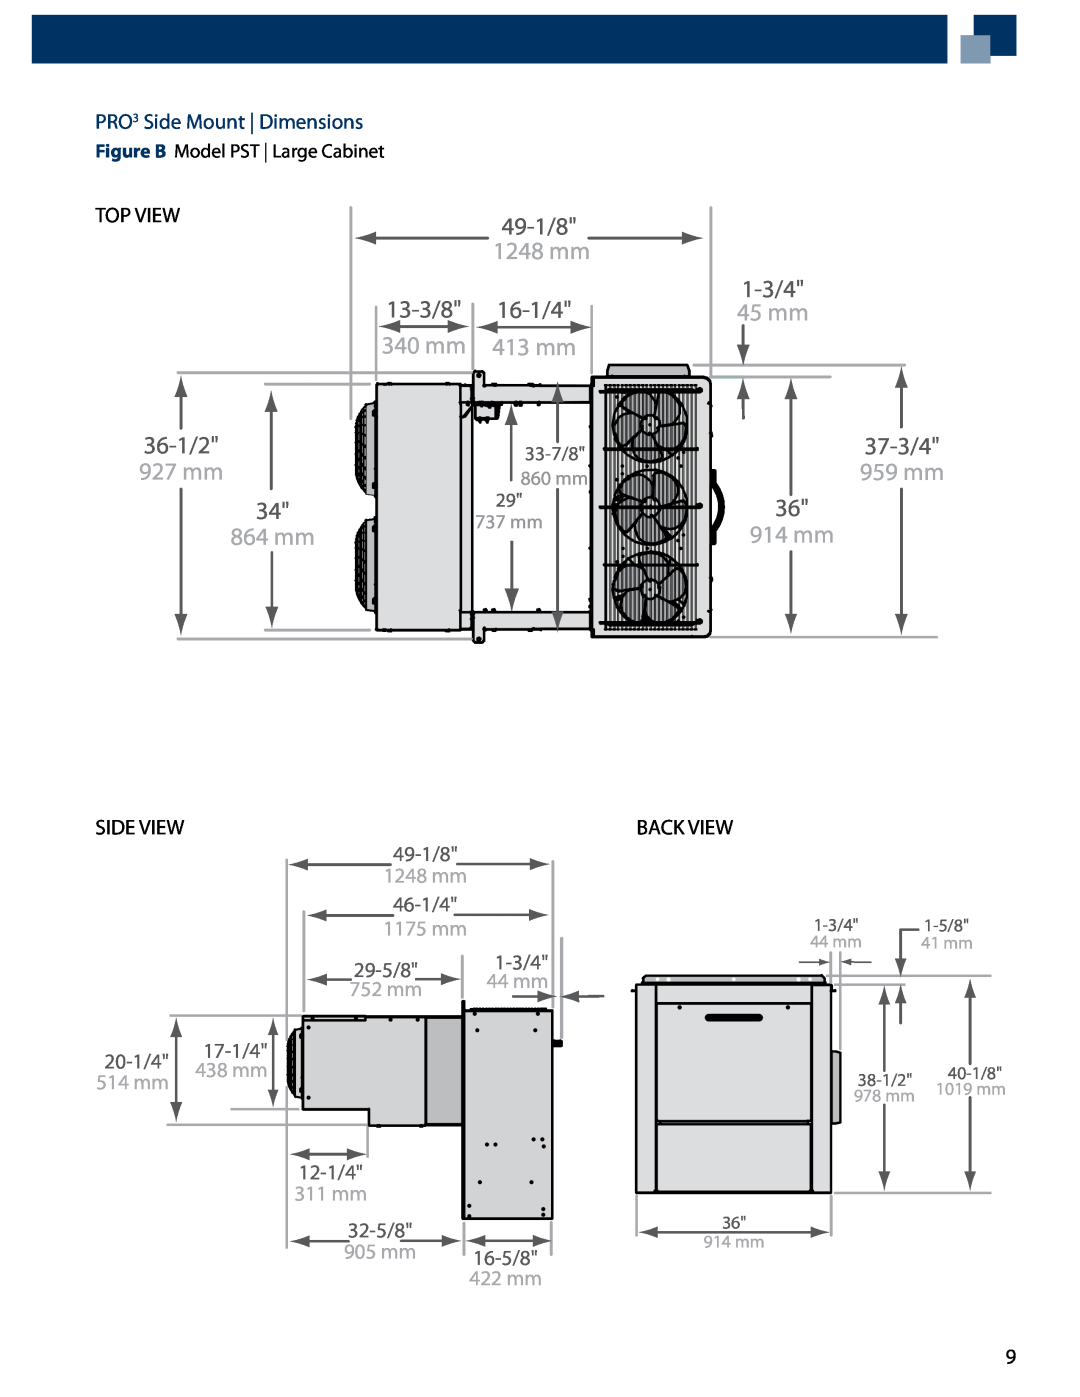 Heatcraft Refrigeration Products PTN 36-1/2, 927 mm, 864 mm, 45 mm, 37-3/4, 959 mm, 914 mm, 33-7/8, 860 mm 737 mm, 13-3/8 